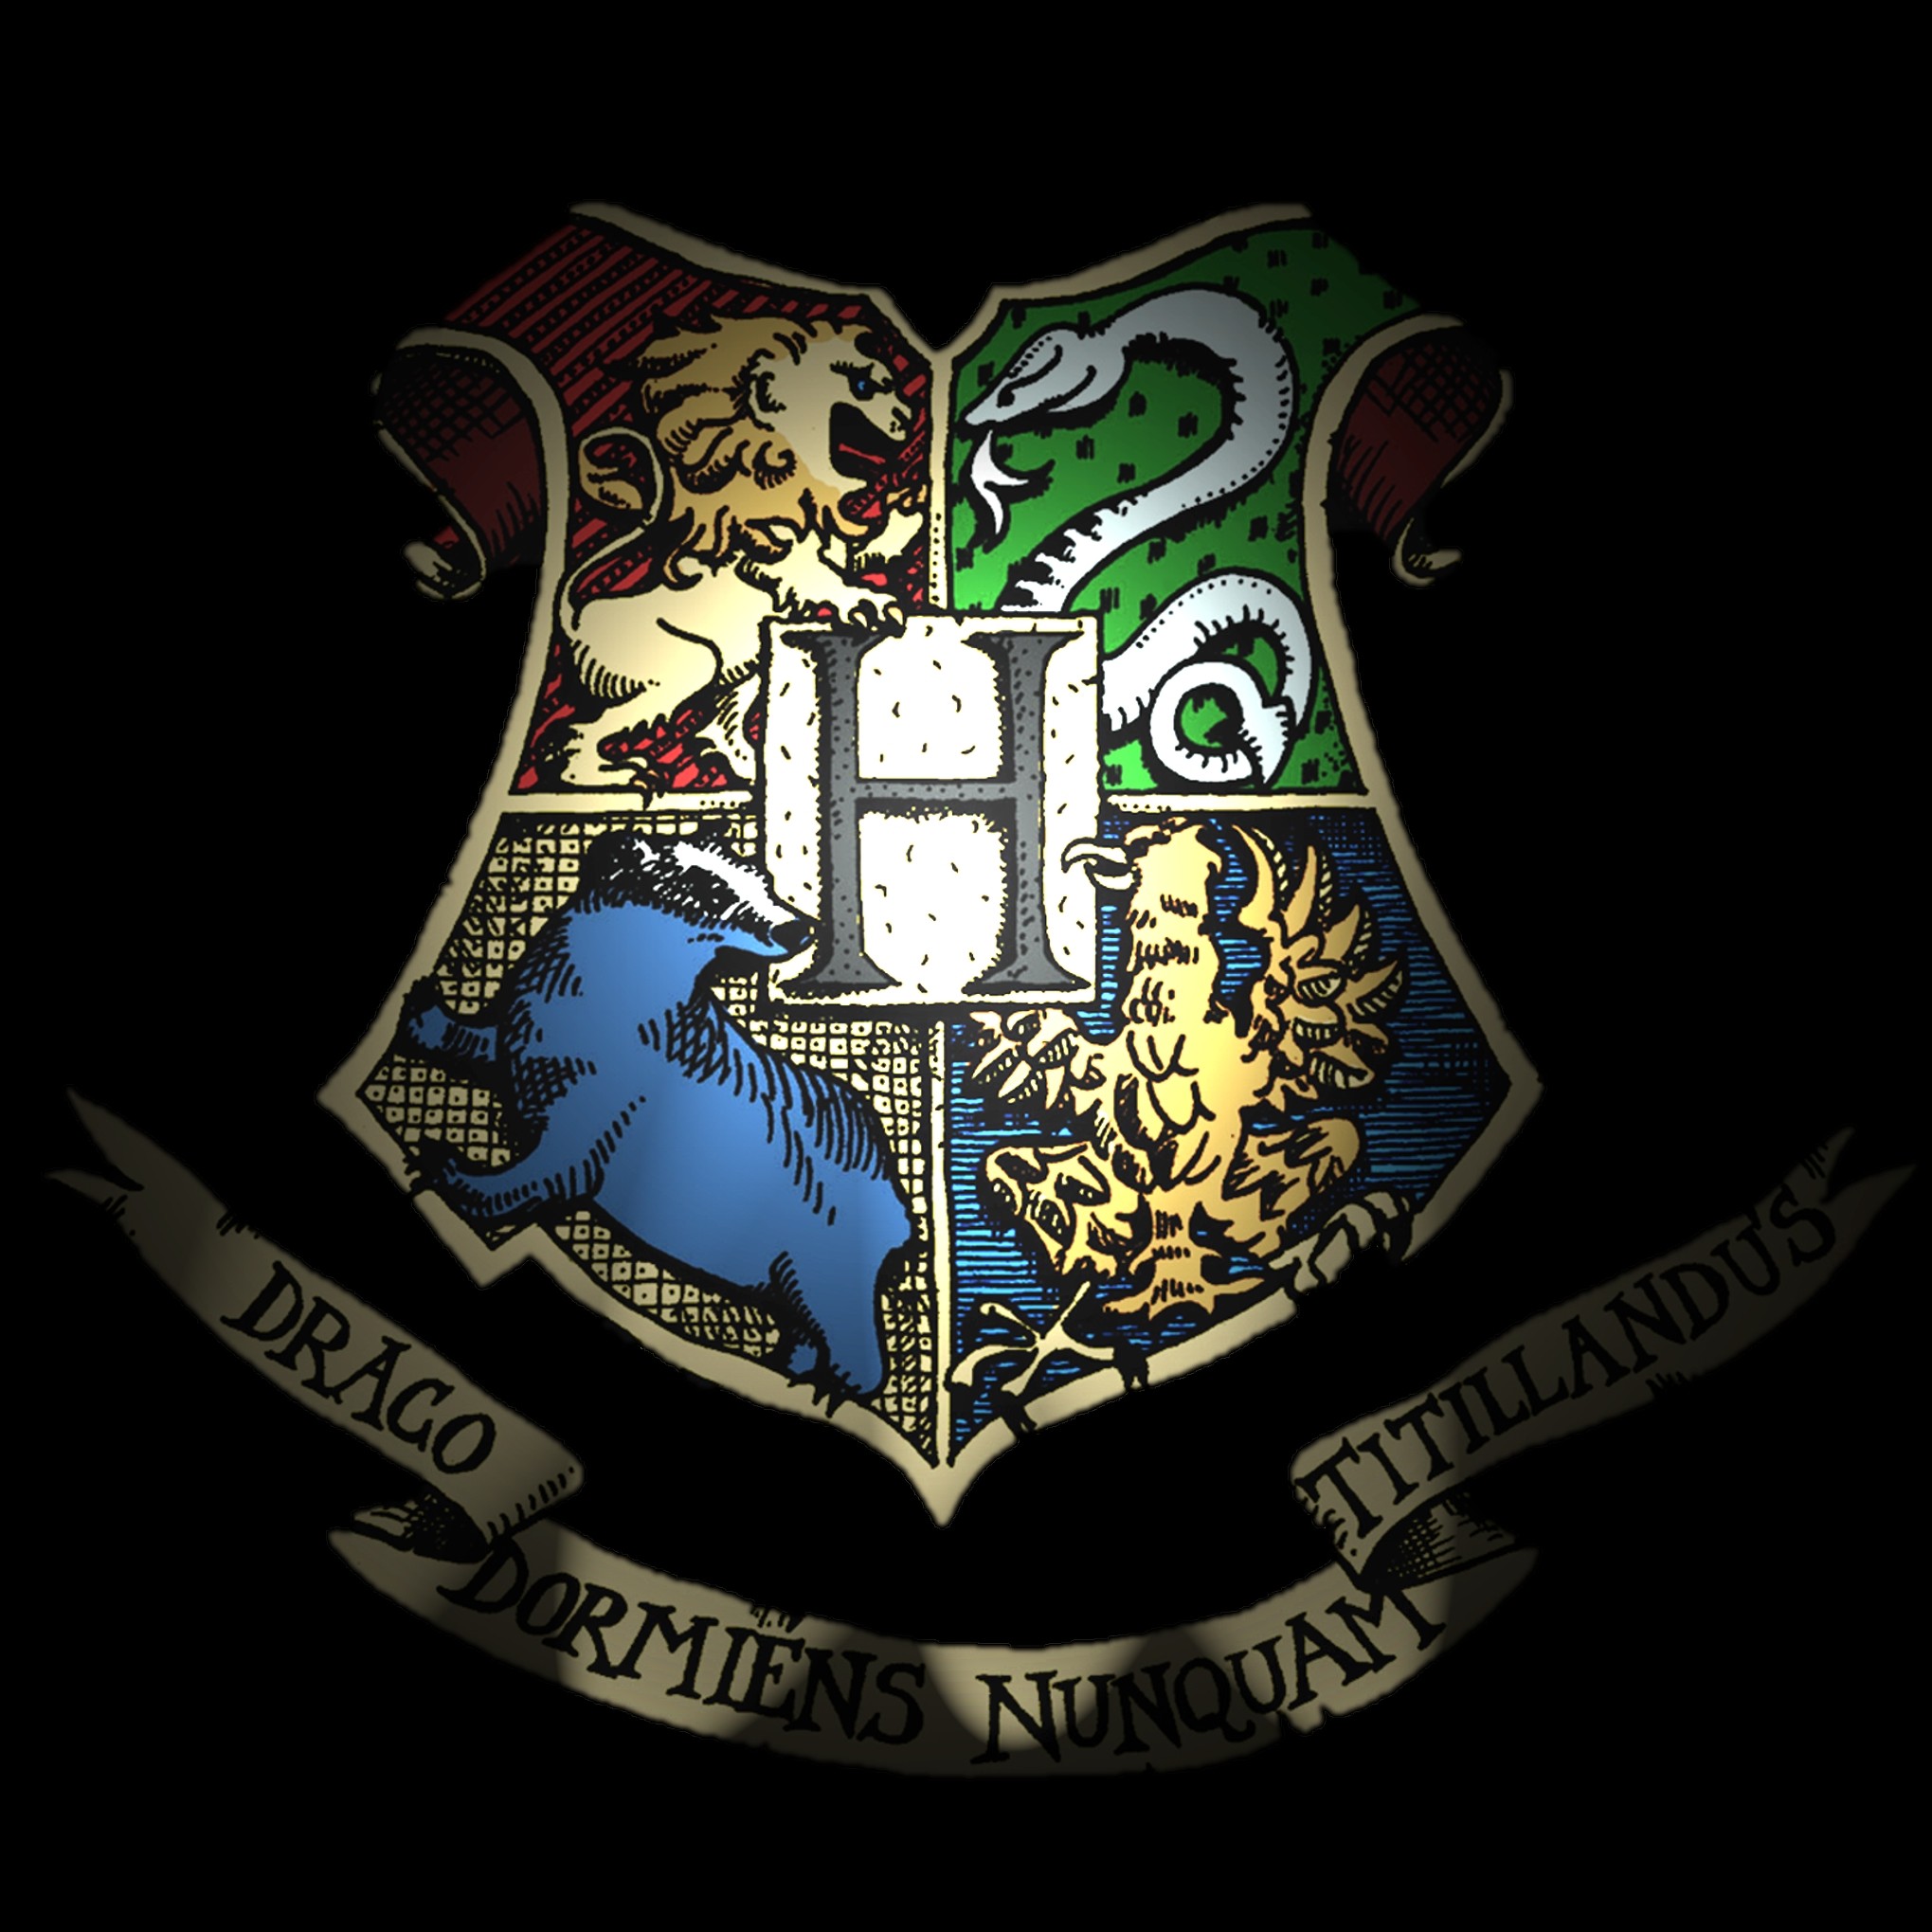 Harry Potter Hogwarts Art Wallpapers